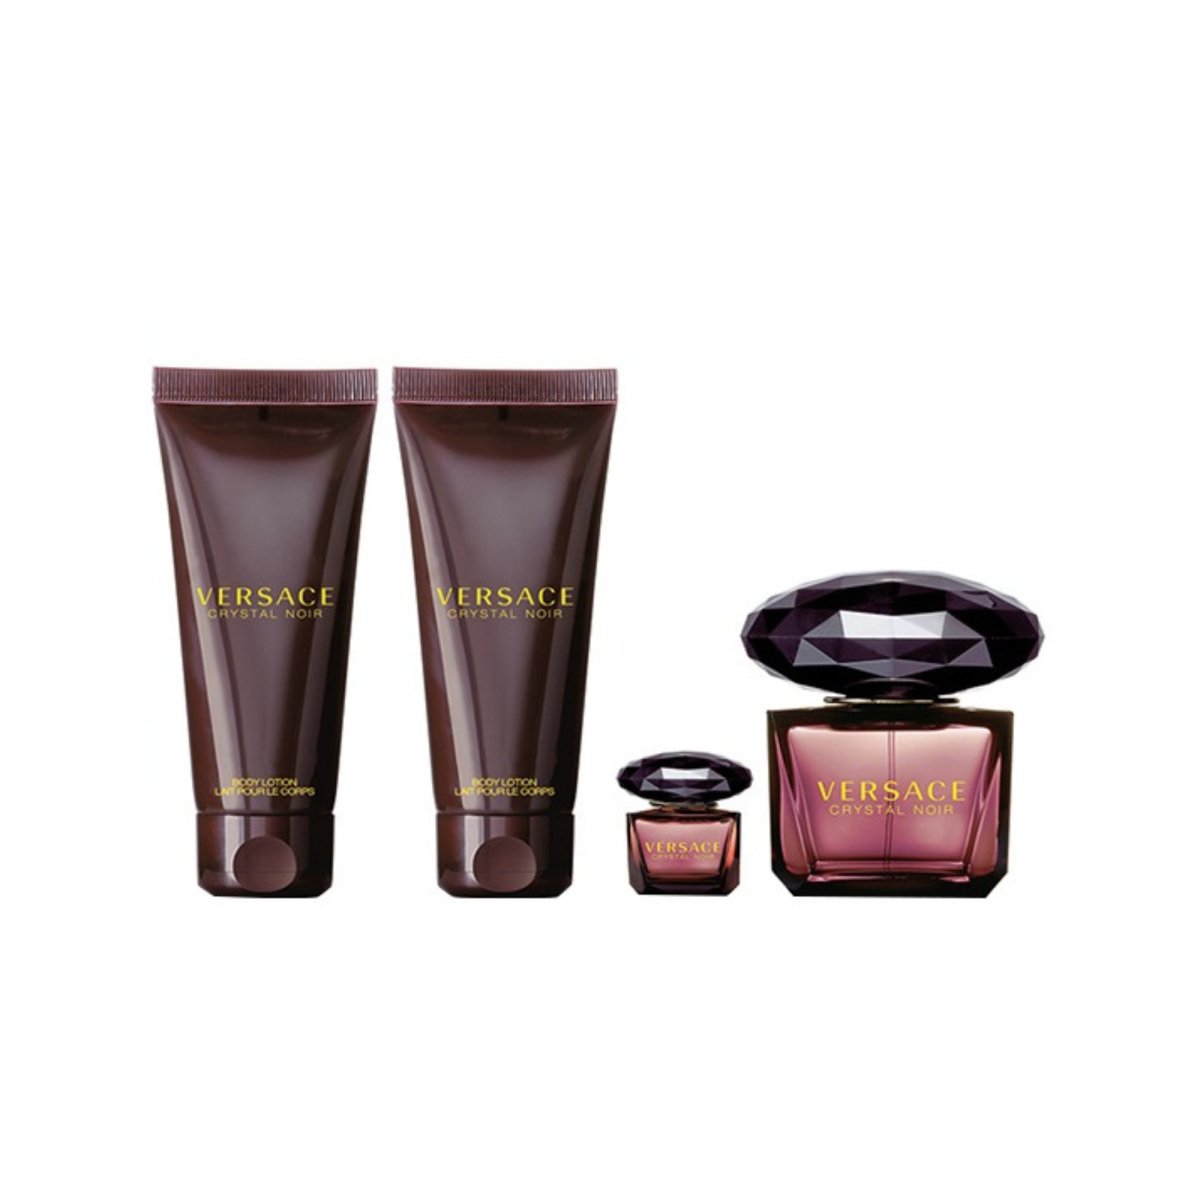  - Versace - Gift Set - 8011003889068 - Gift Set